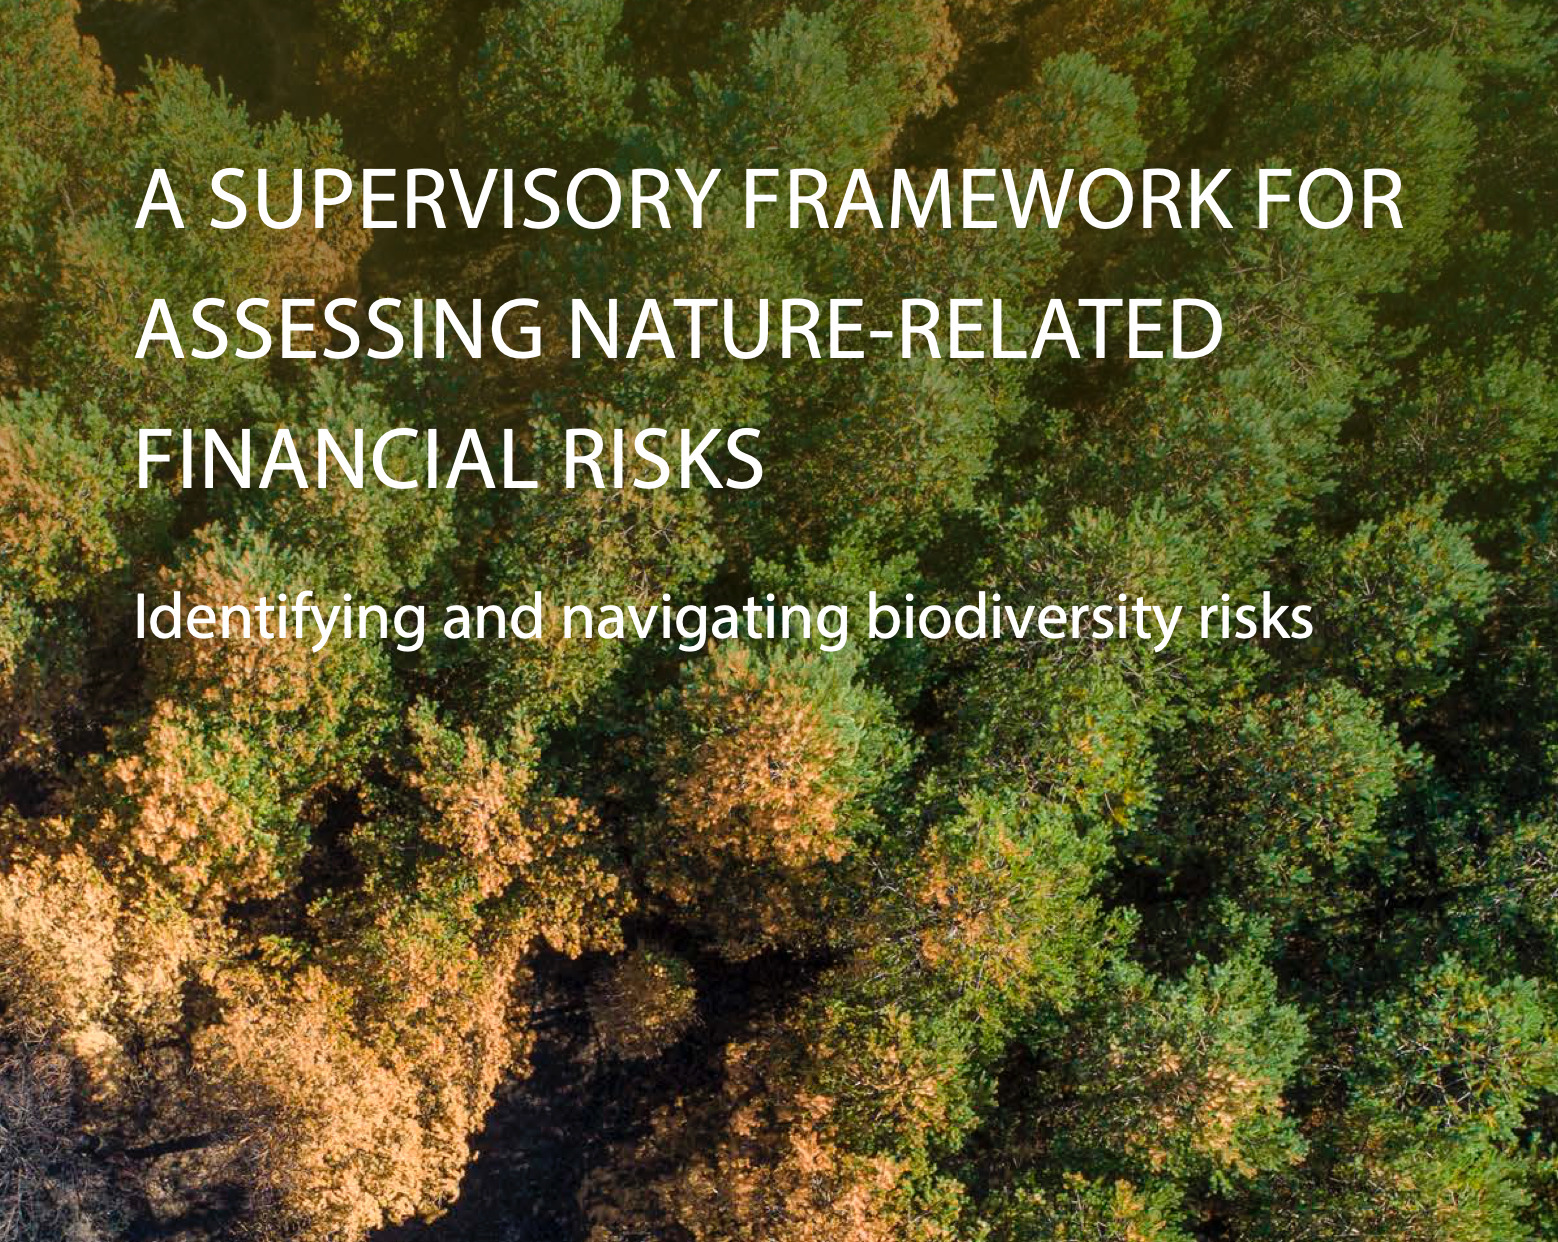 A supervisory framework for assessing nature-related financial risks